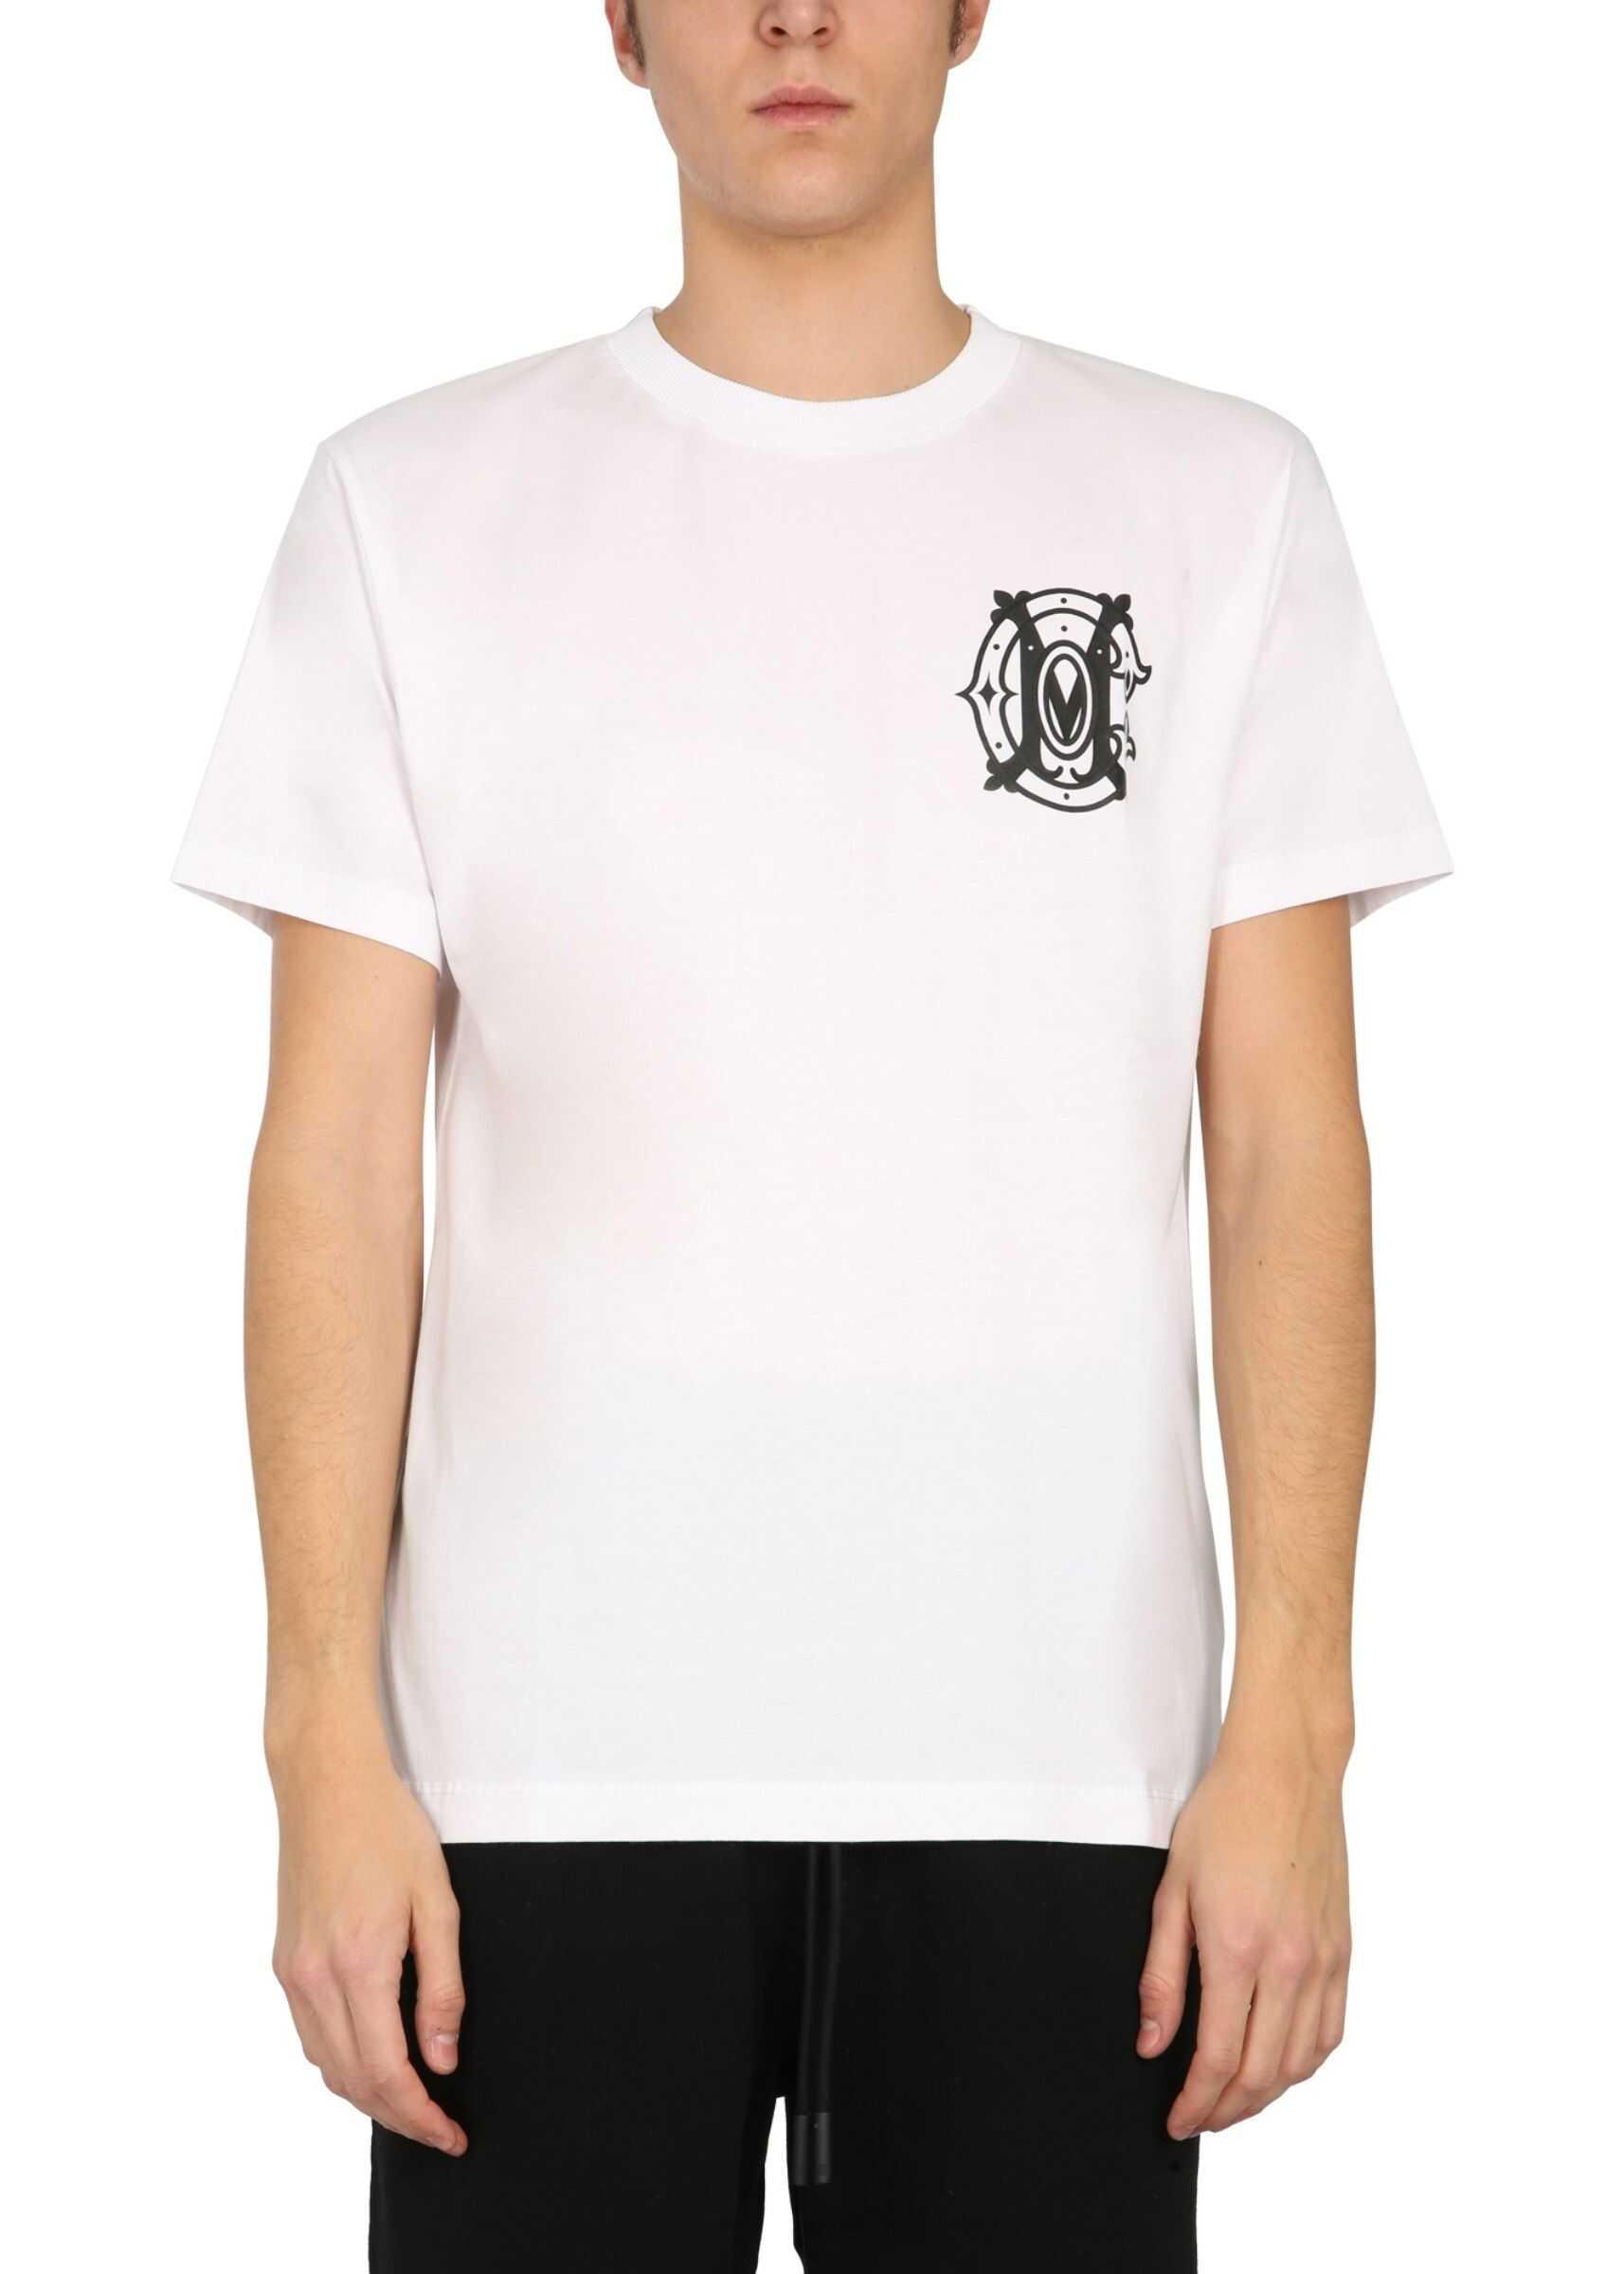 "Monogram" T-Shirt